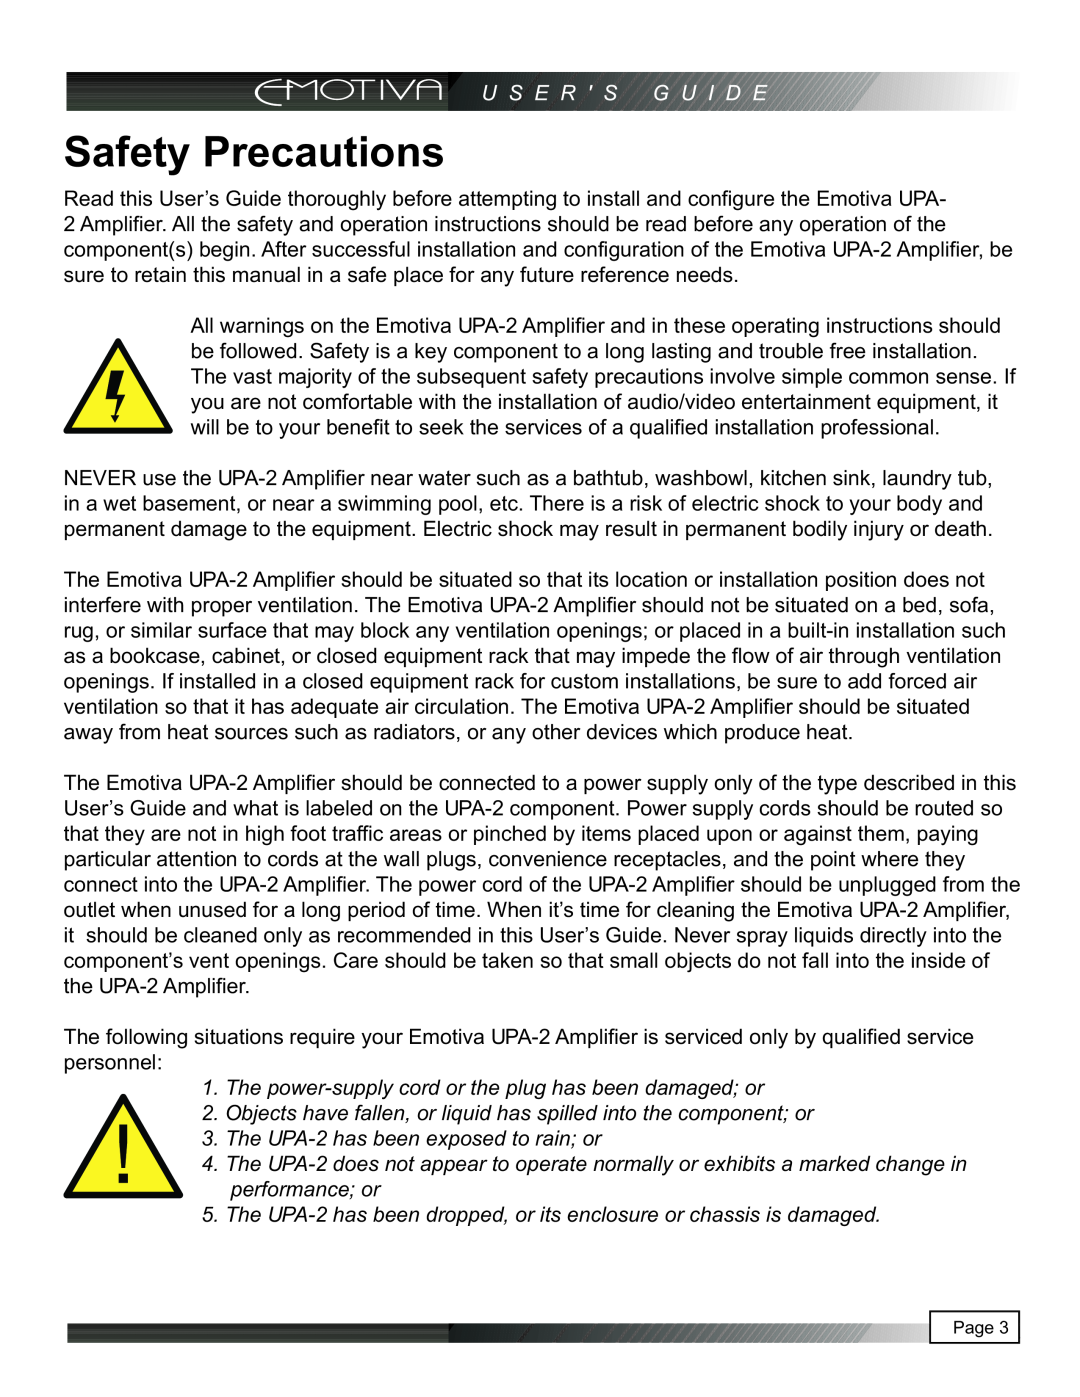 Emotiva UPA-2 manual Safety Precautions 